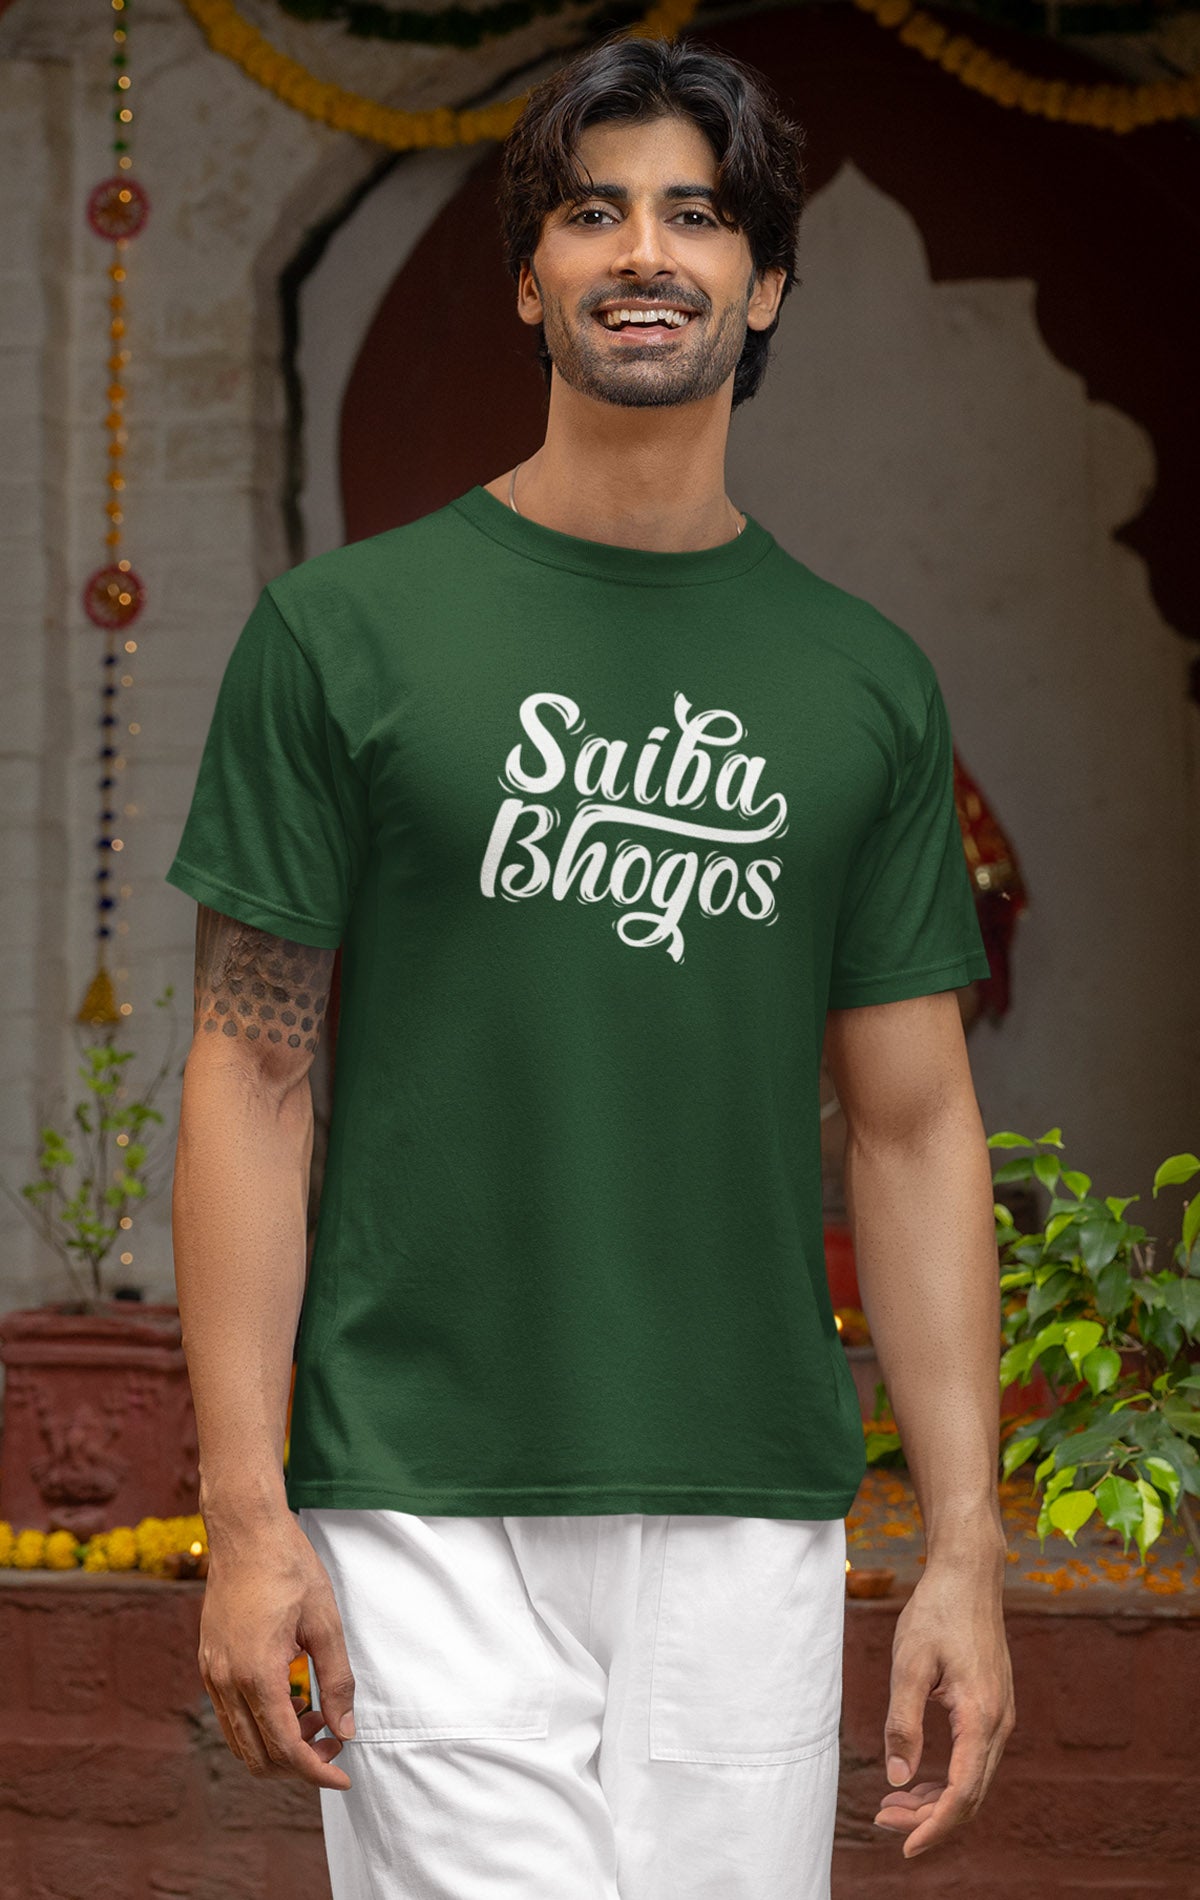 Saiba Bhogos T-Shirt - Celebrate Goa's Spirit.